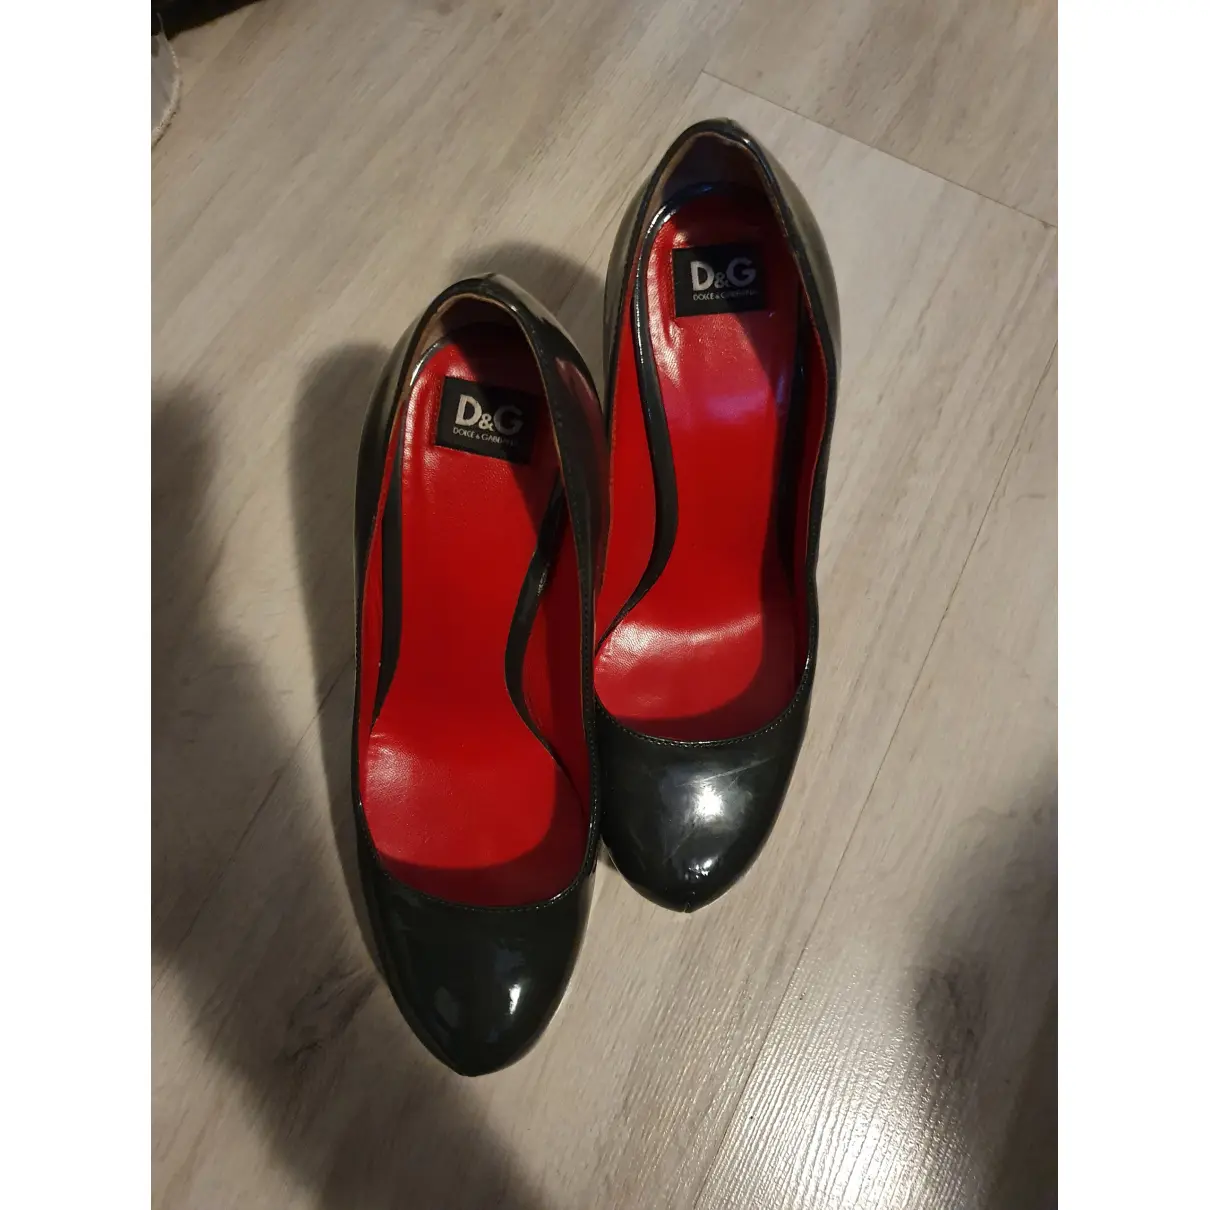 Buy D&G Patent leather heels online